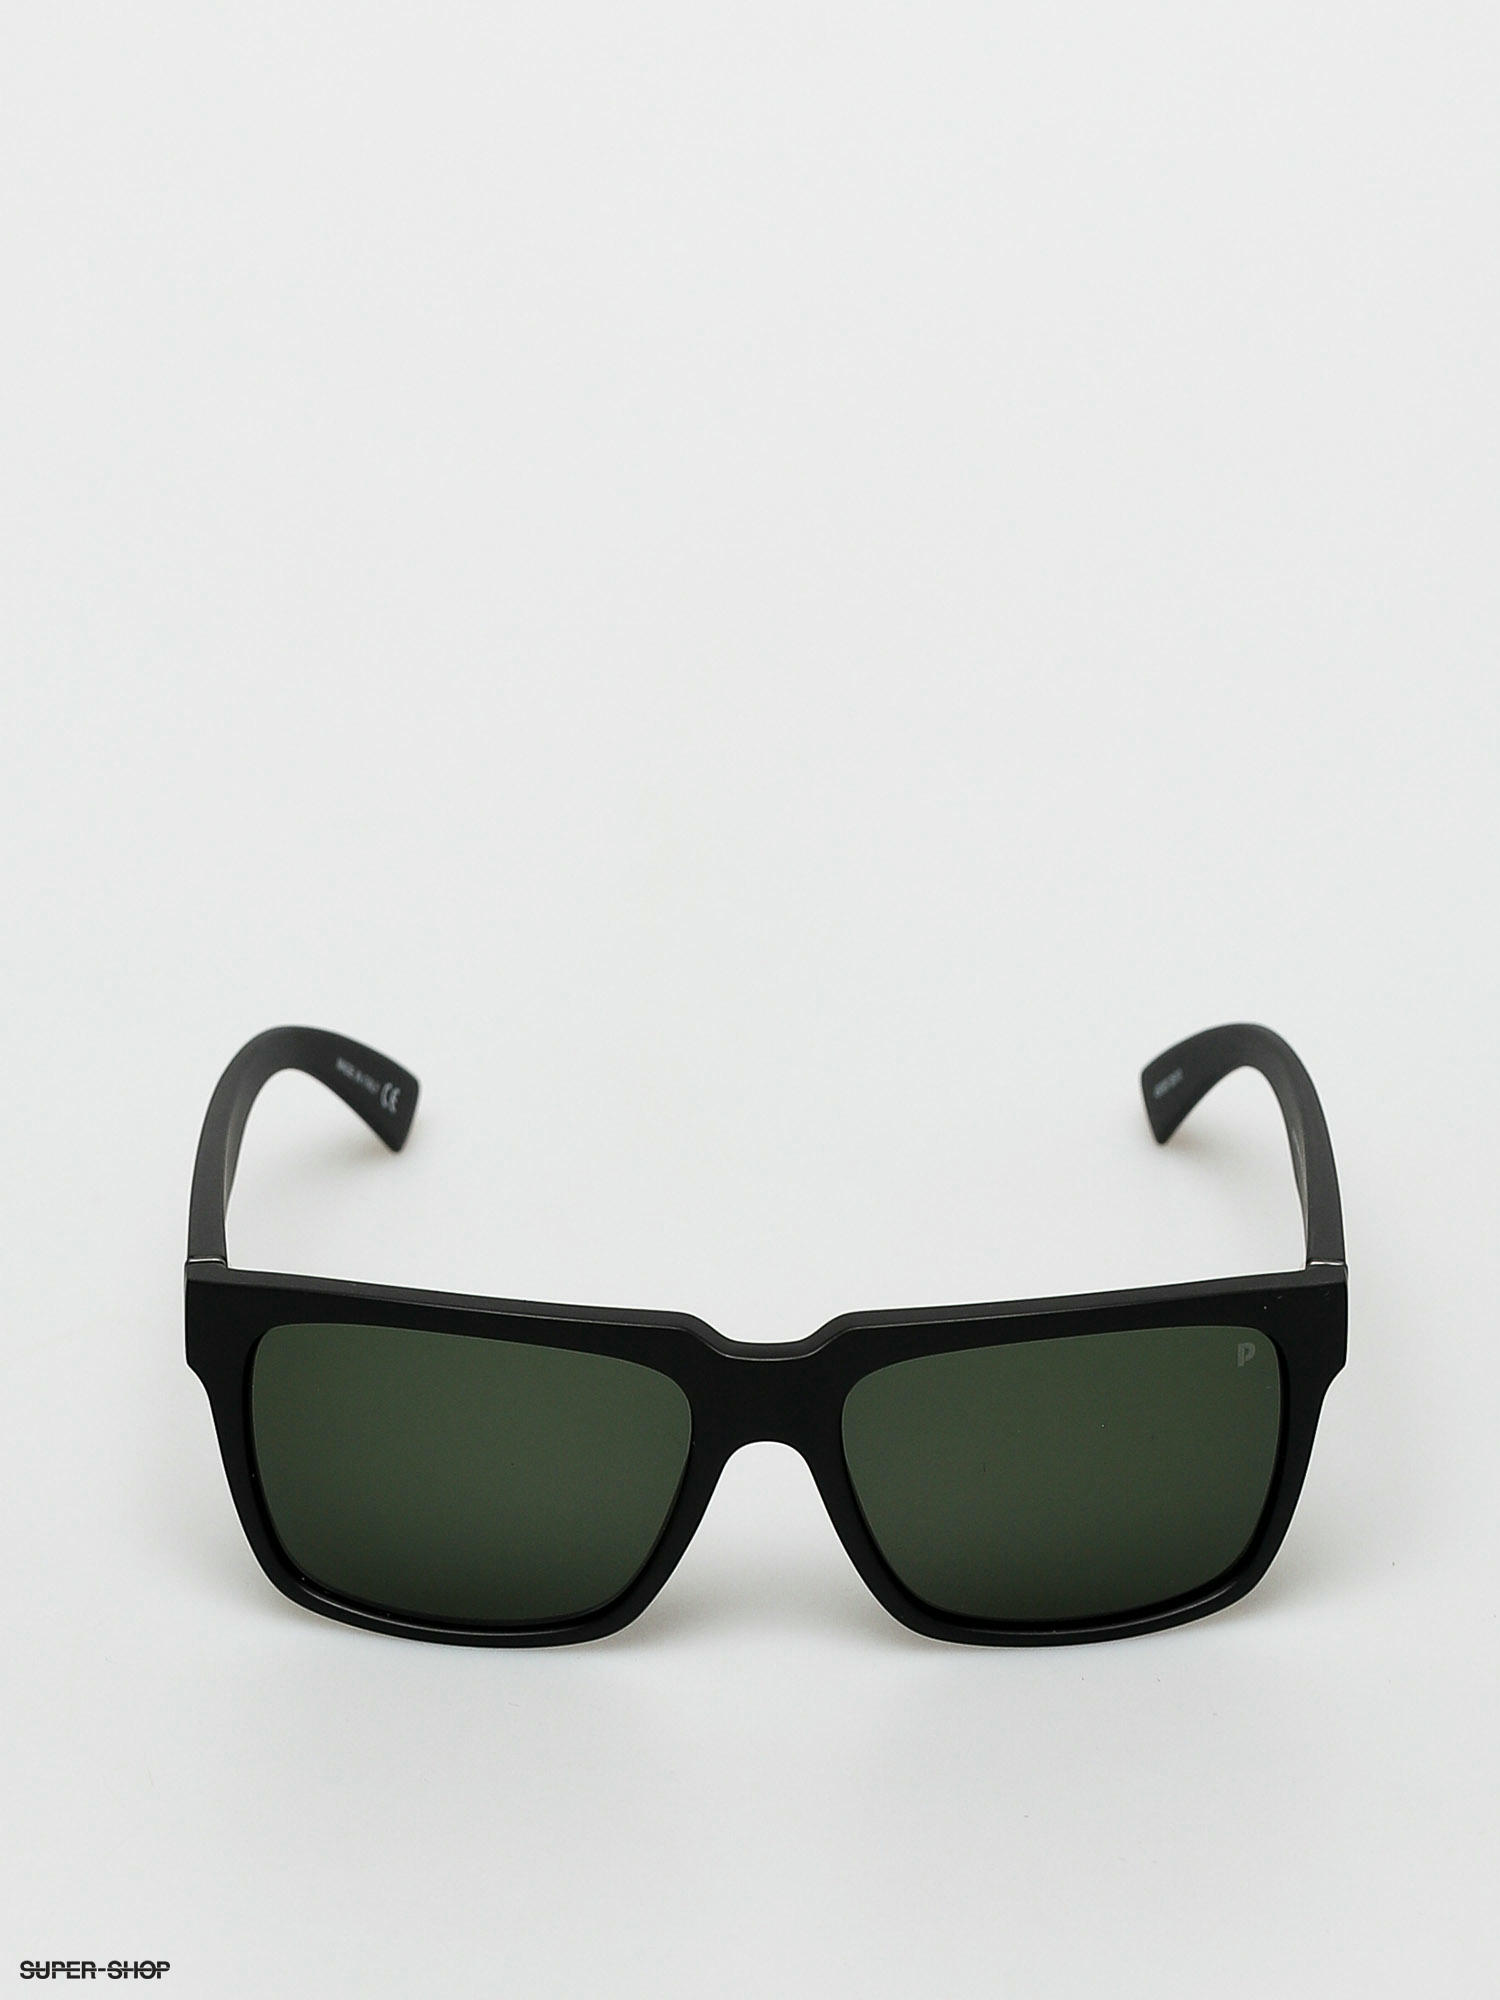 Quiksilver Bruiser Polarized Sunglasses black/green (matte p)